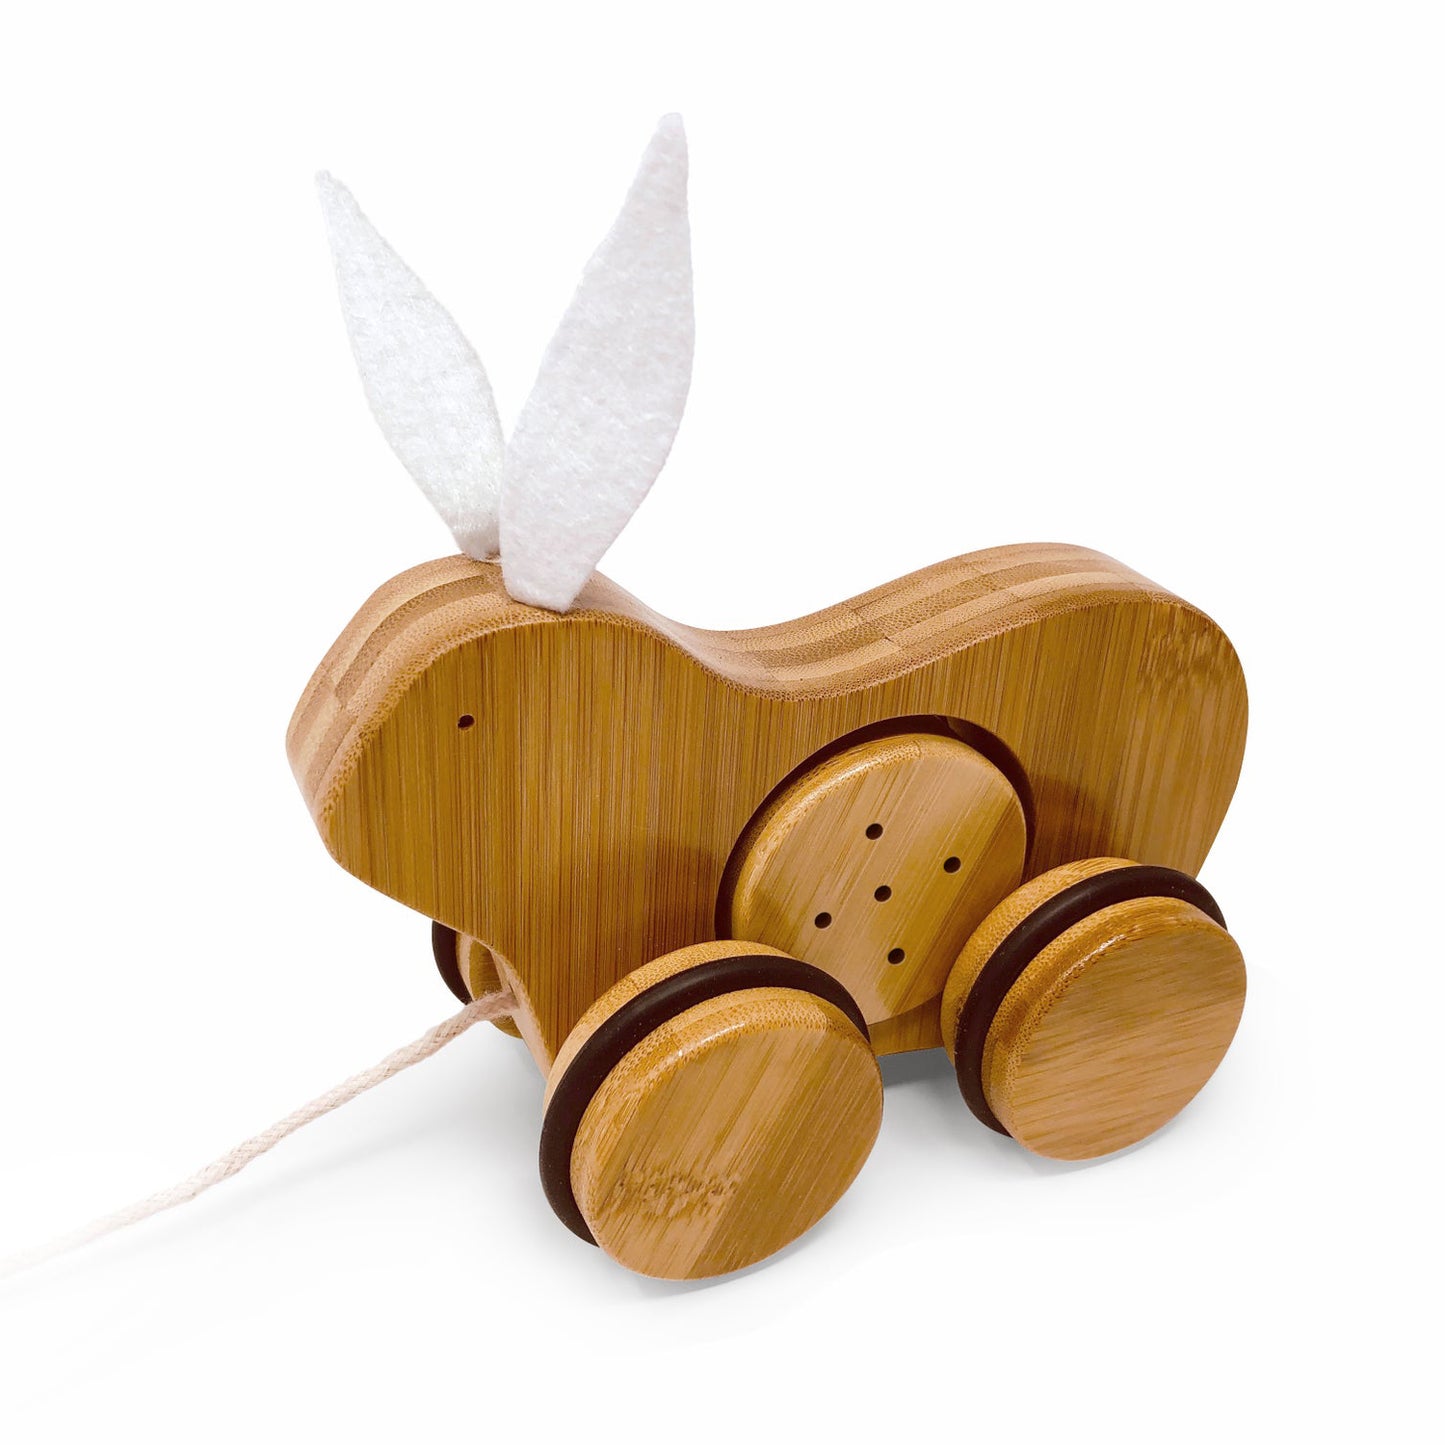 Push & Pull bamboo rabbit toy